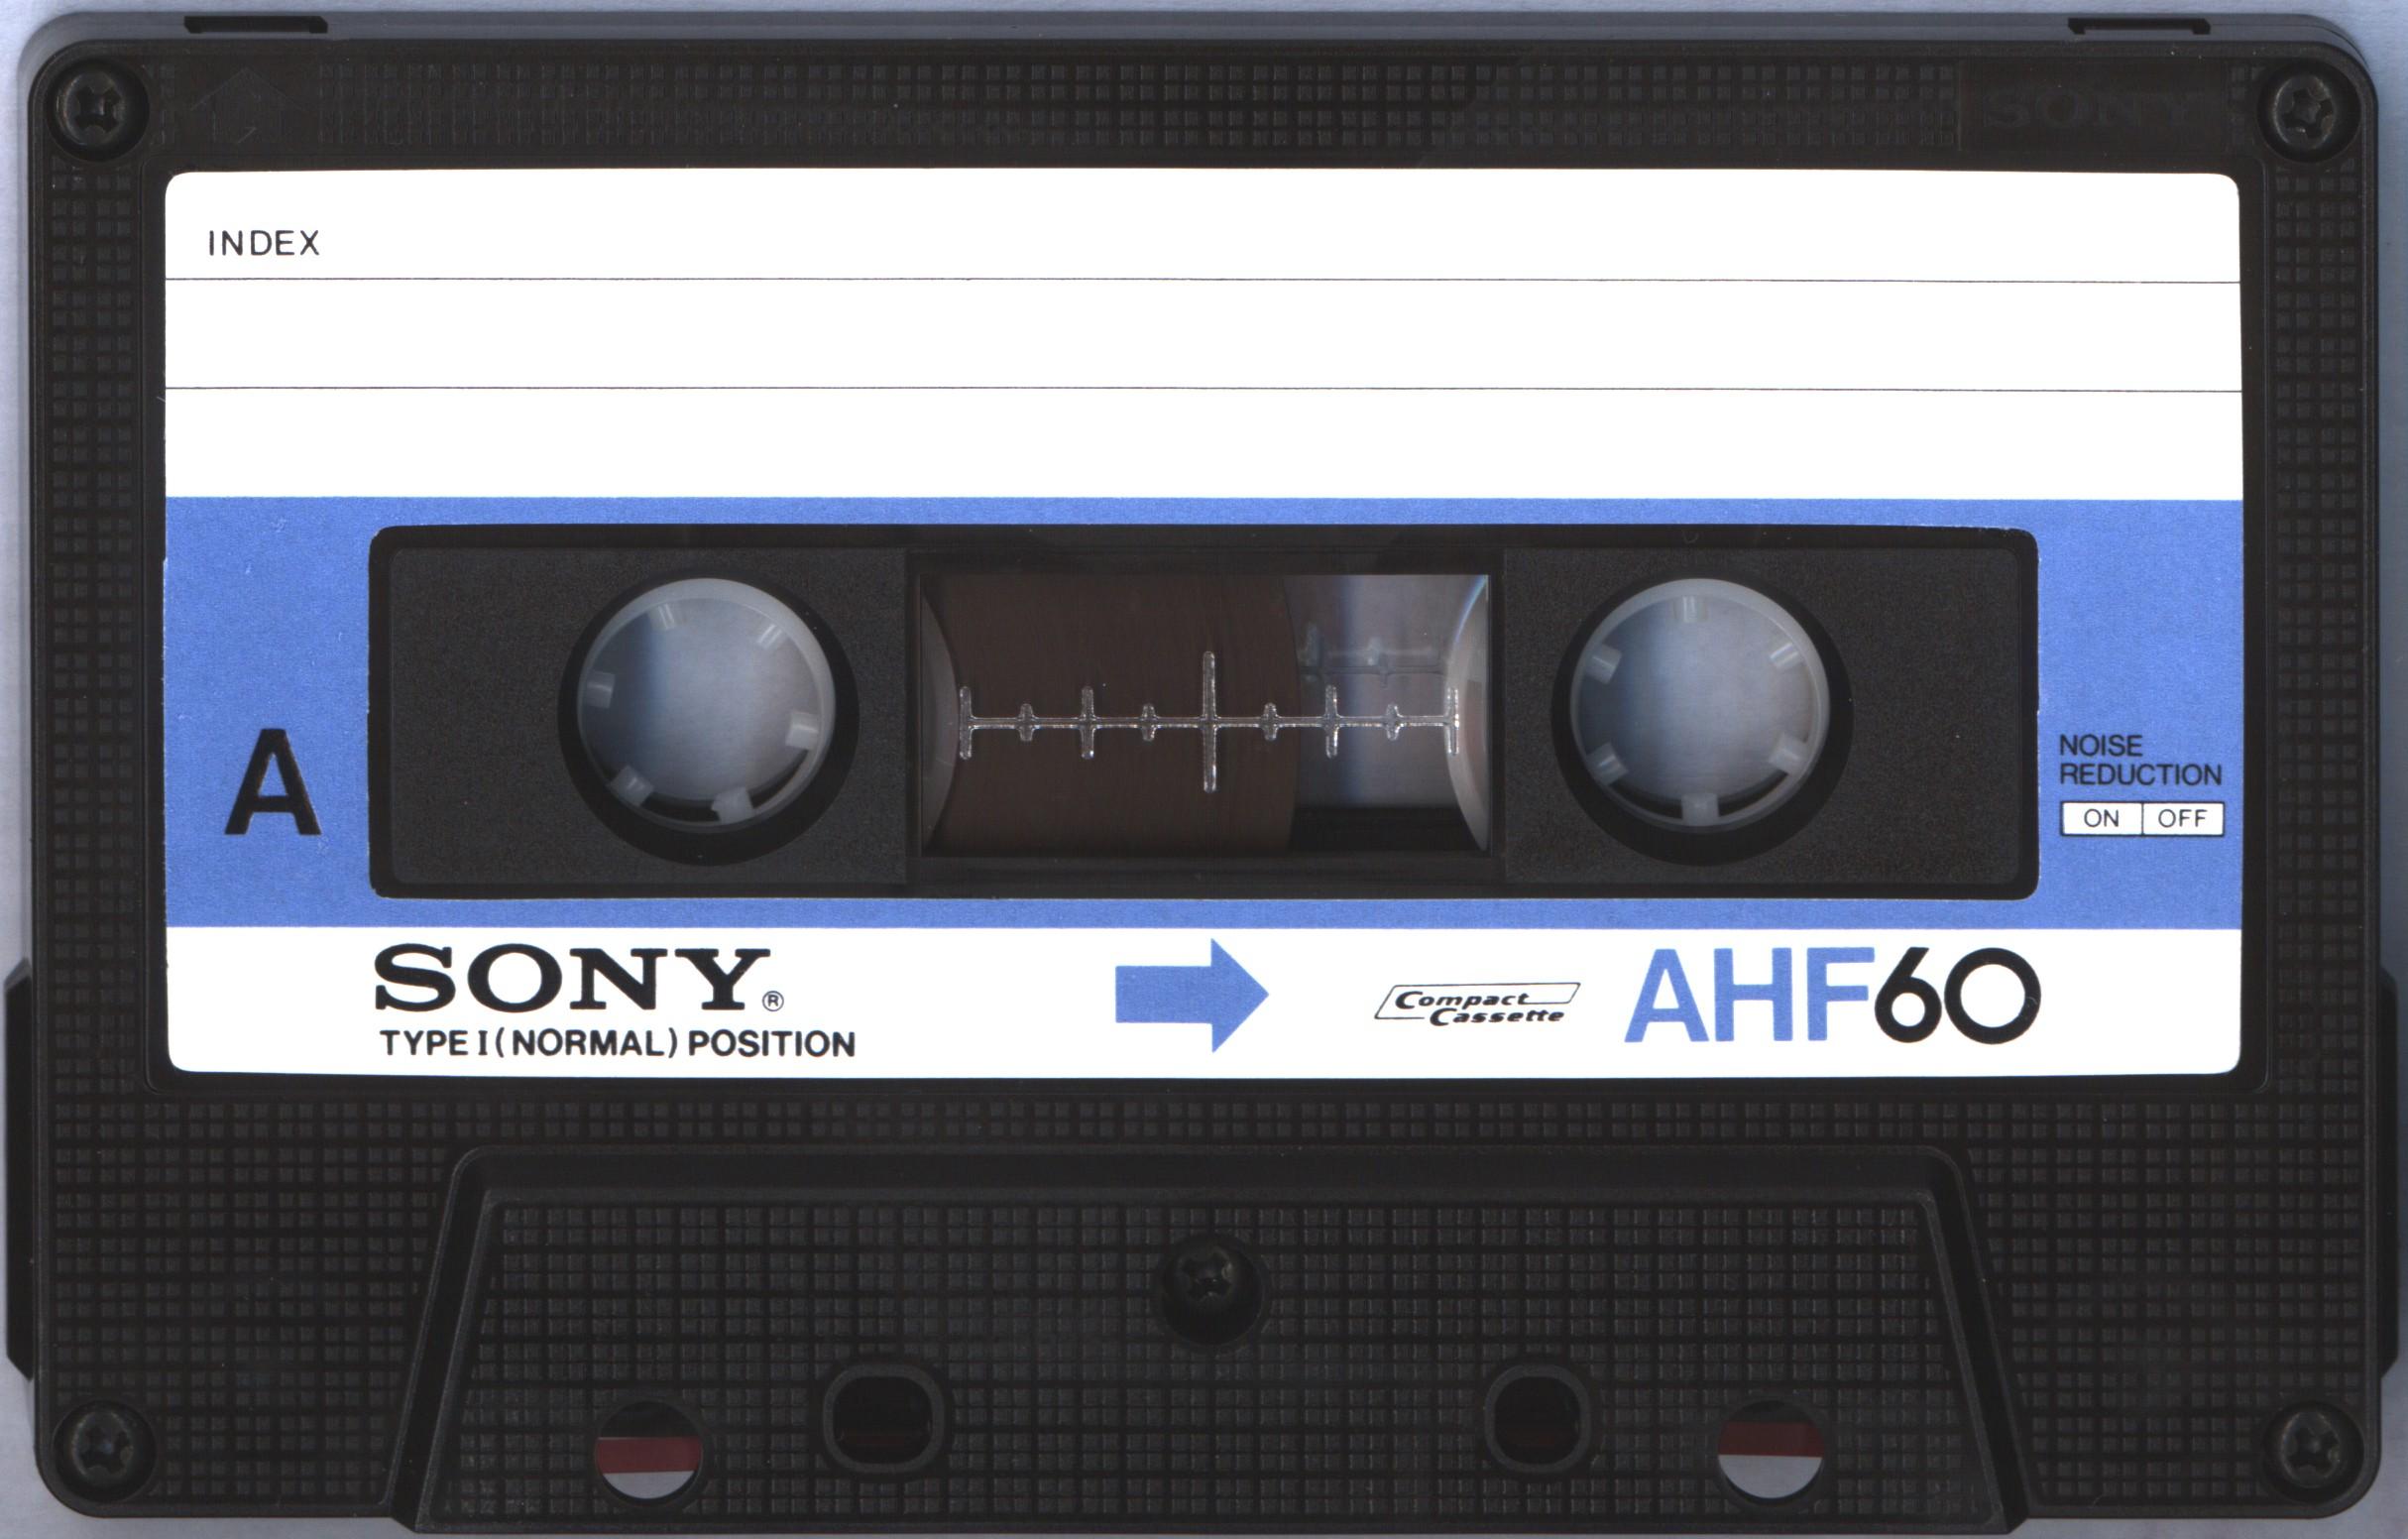 Батина кассета. Аудиокассета Sony AHF 1978. Компакт кассета Sony. Кассета Sony BHF 46. Кассета сони для магнитофона.